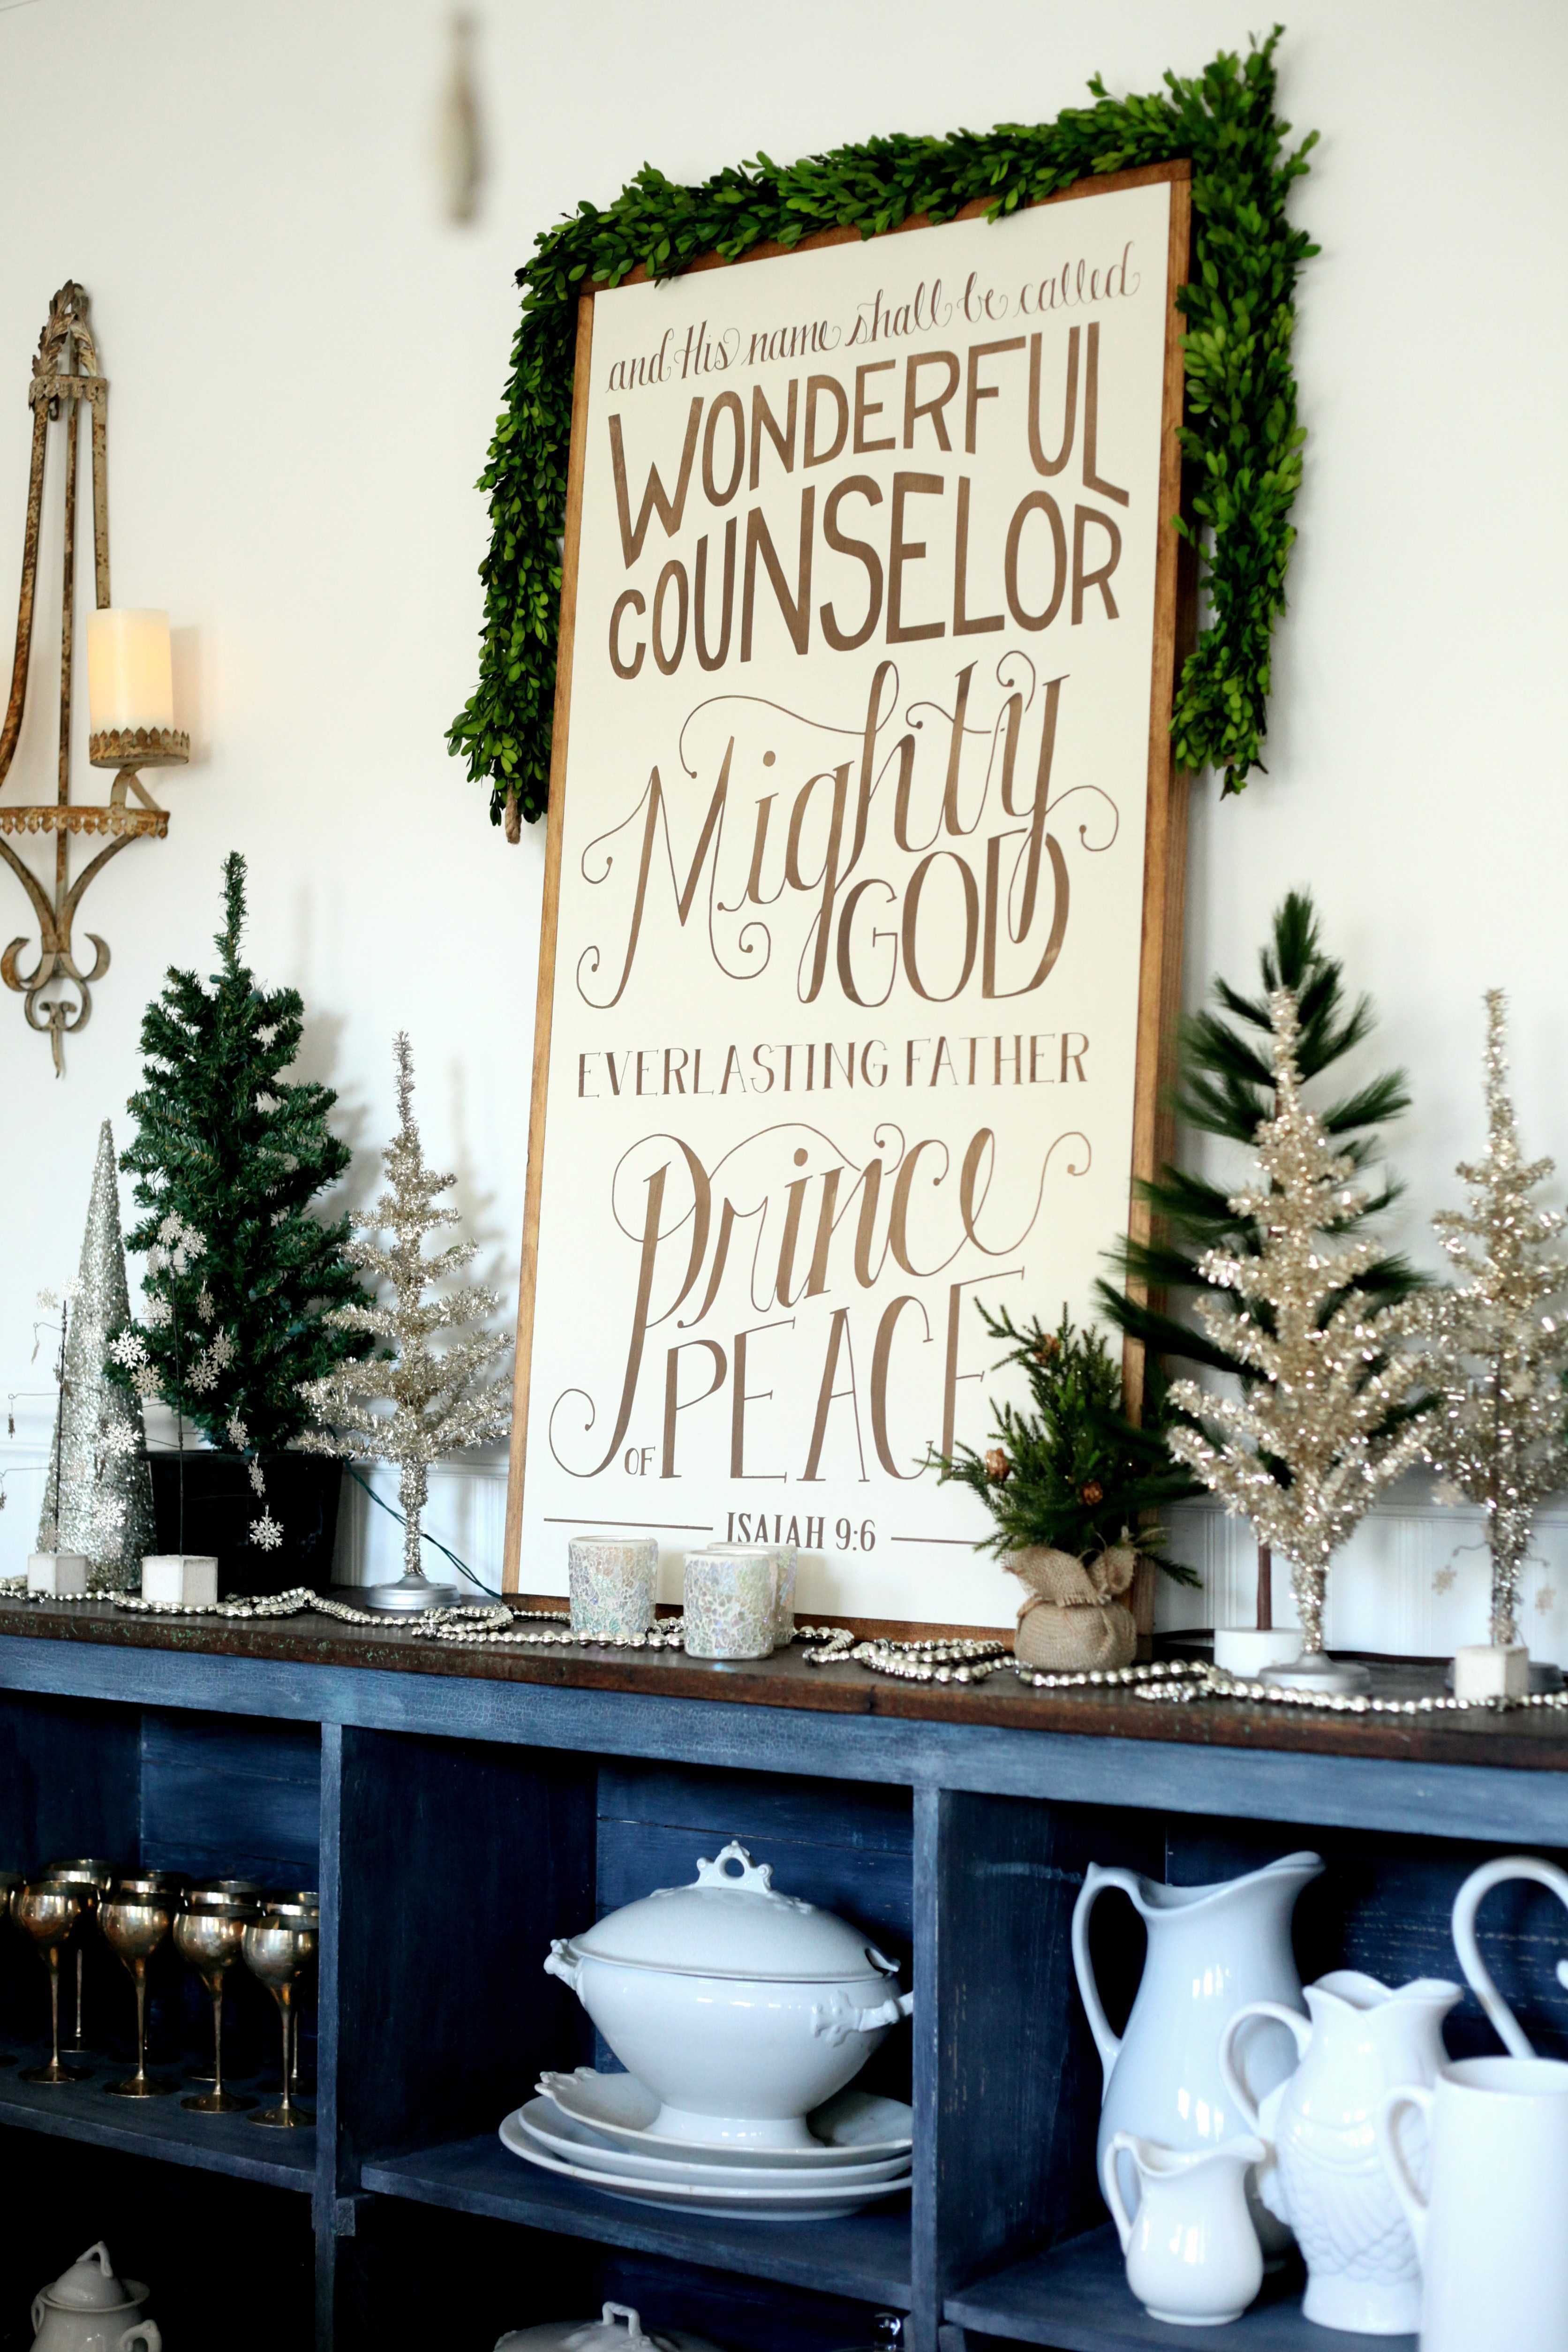 Beautiful Christmas decor using a Vintage Ladder for a Mason Jar Advent Calendar. So festive and fun! See more on https://ablissfulnest.com/ #Christmas #Advent #ChristmasDecor